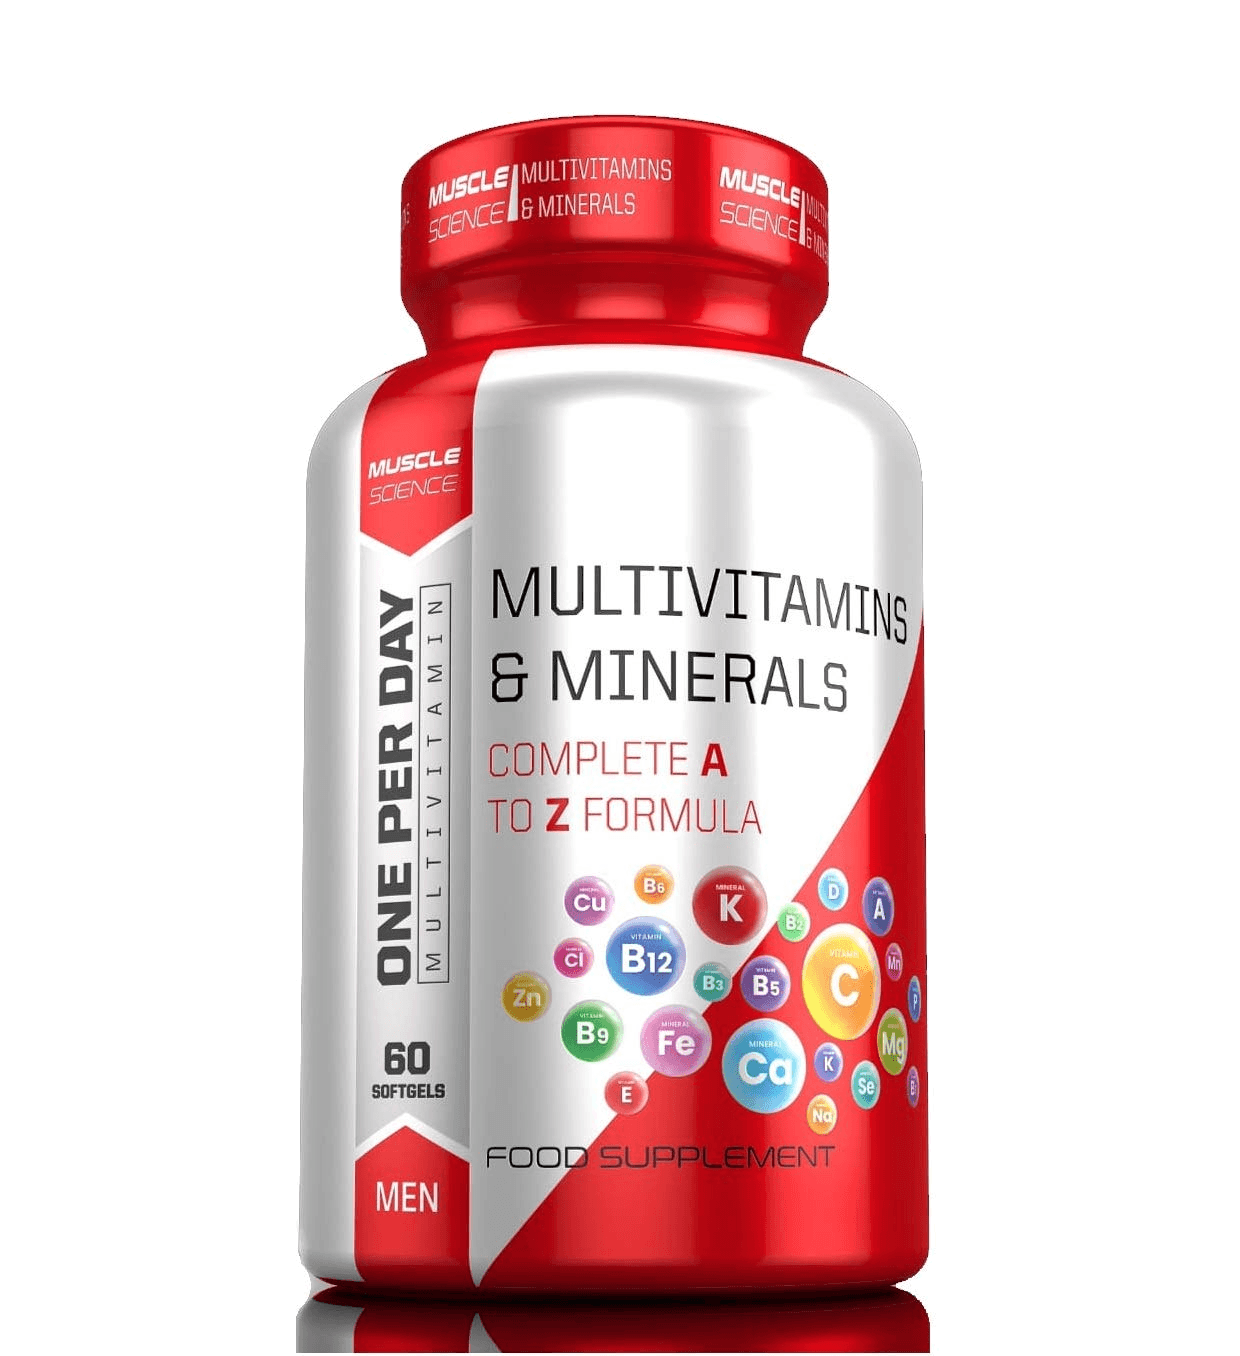 Buy Muscle Science Men Multivitamin One Per Day 60 Softgels Online Nutristar 8585